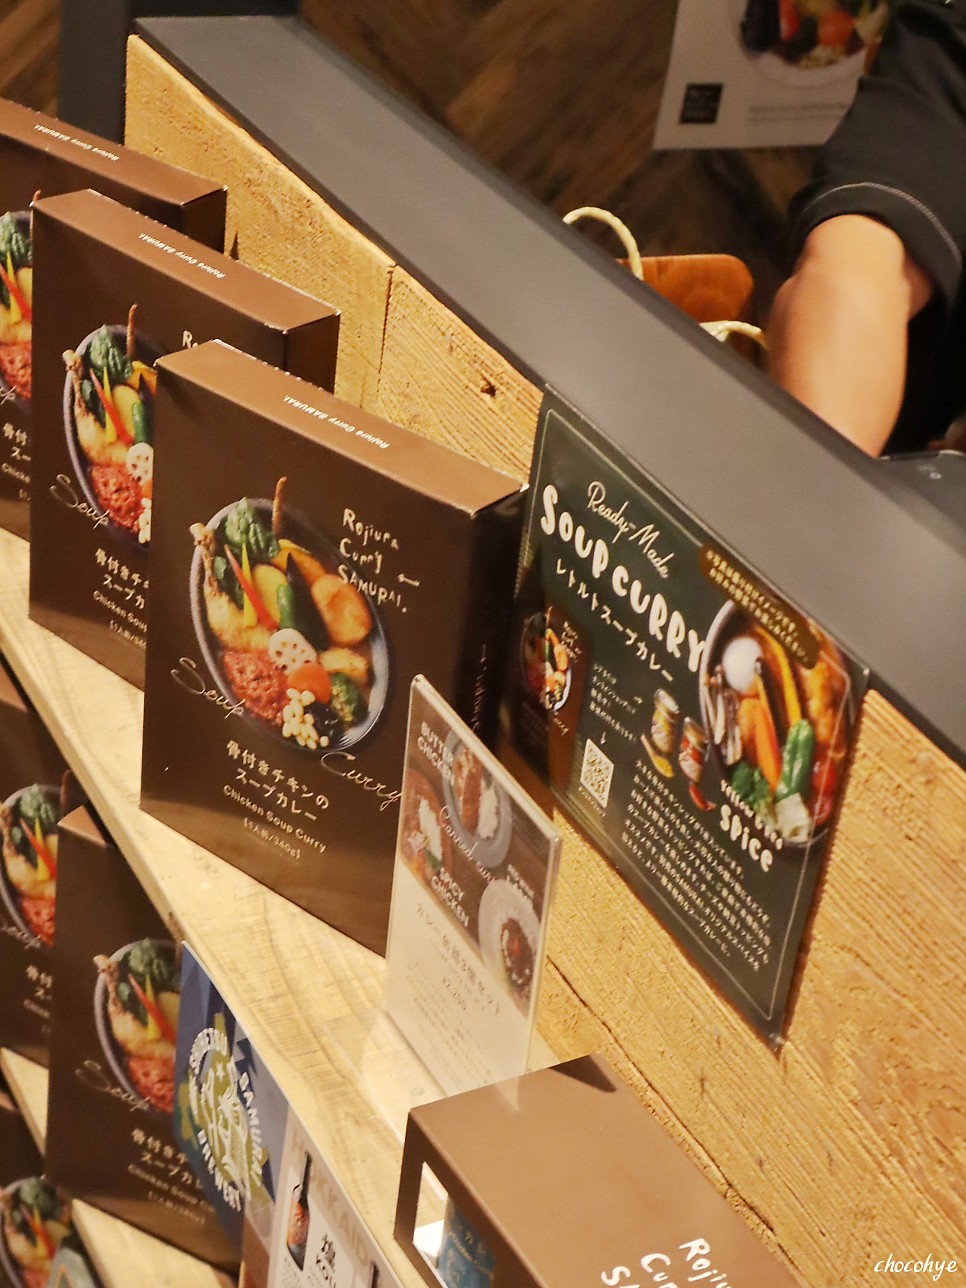 GRAND FRONT OSAKA SHOP＆RESTAURANT 맛집 카페 쇼핑 한번에!